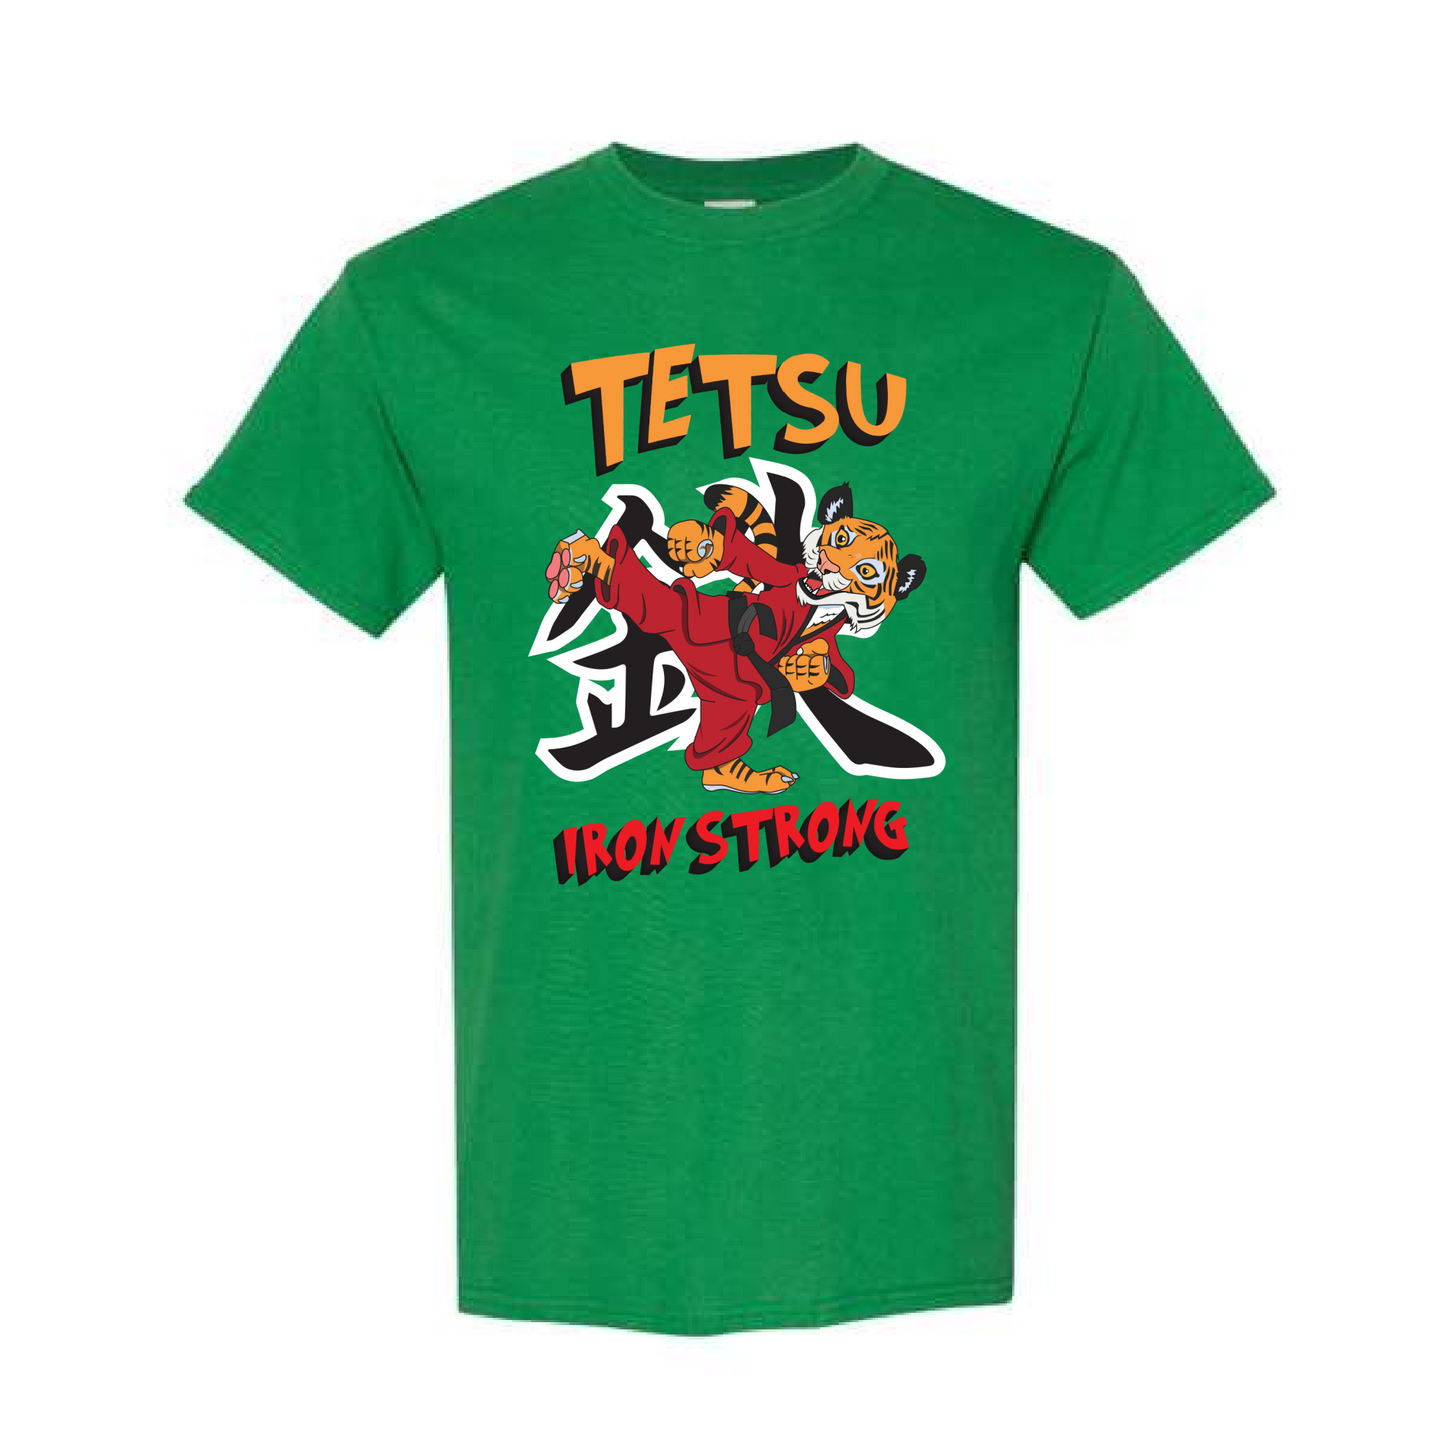 Tetsu Tiger Iron Strong T-Shirt